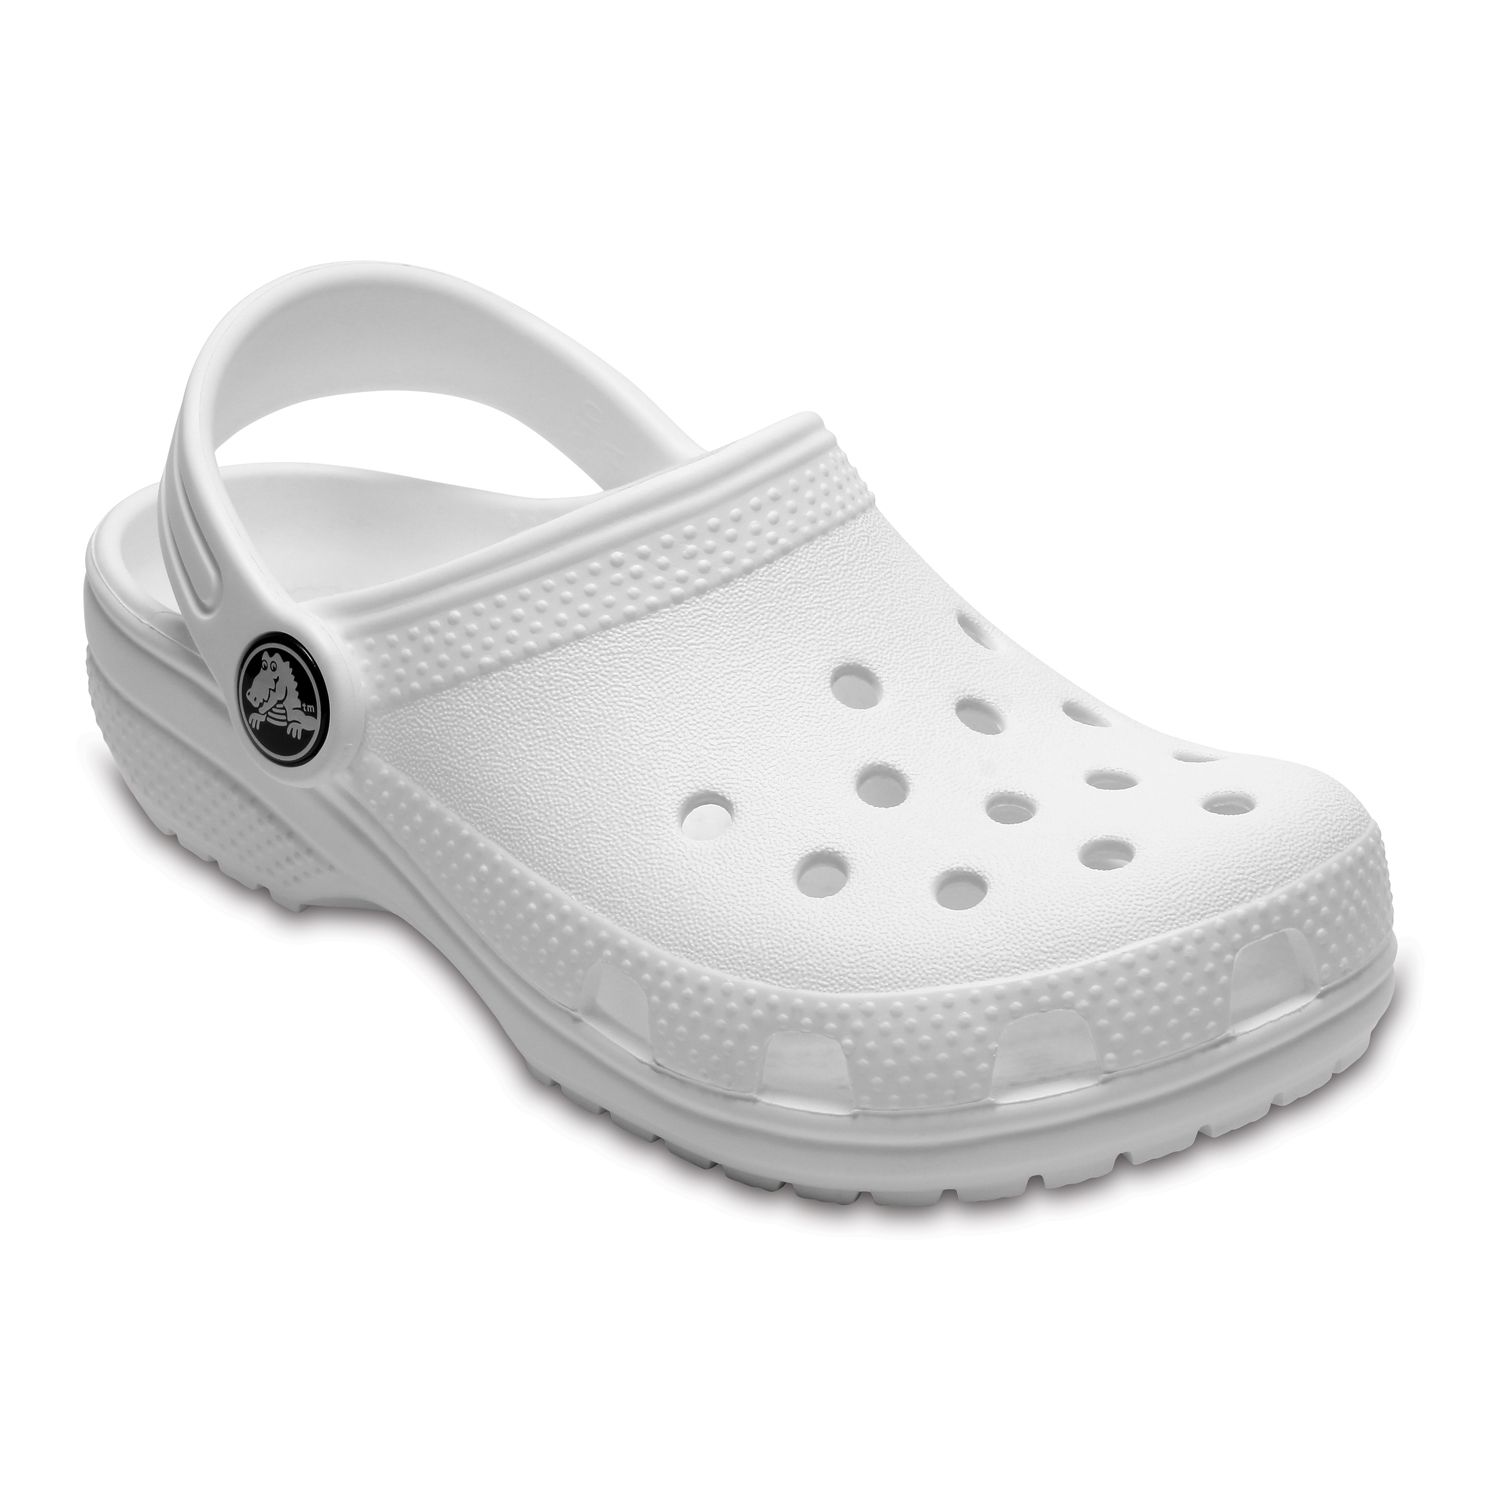 girls crocs size 7